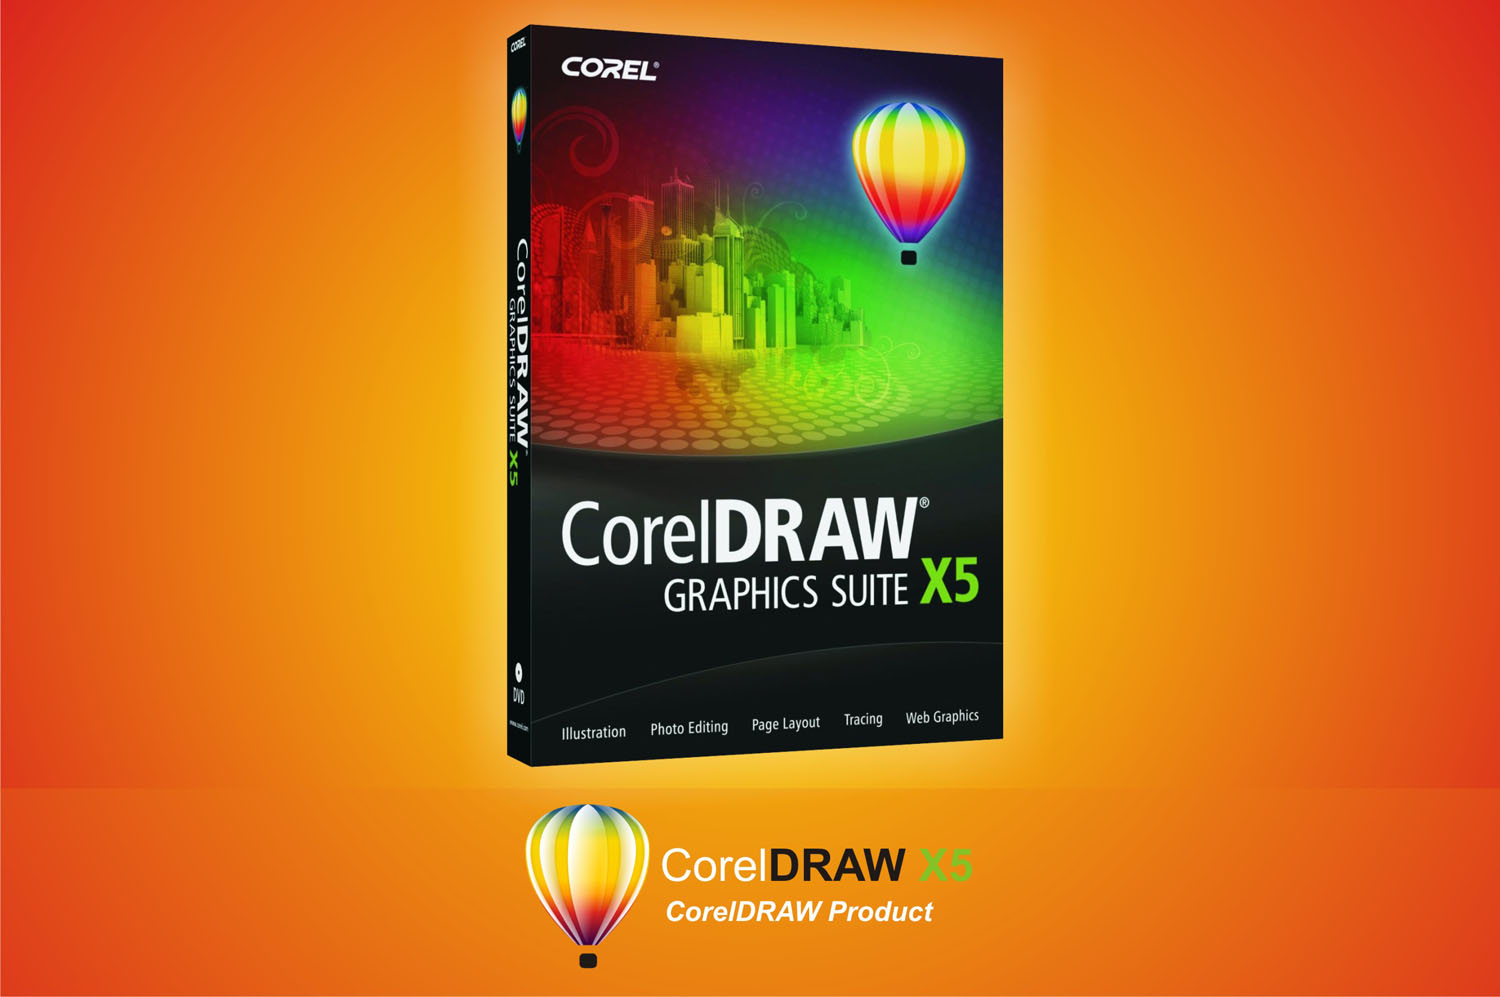 Coreldraw graphics suite x5 free trial download winrar zip free download for windows 10 64 bit